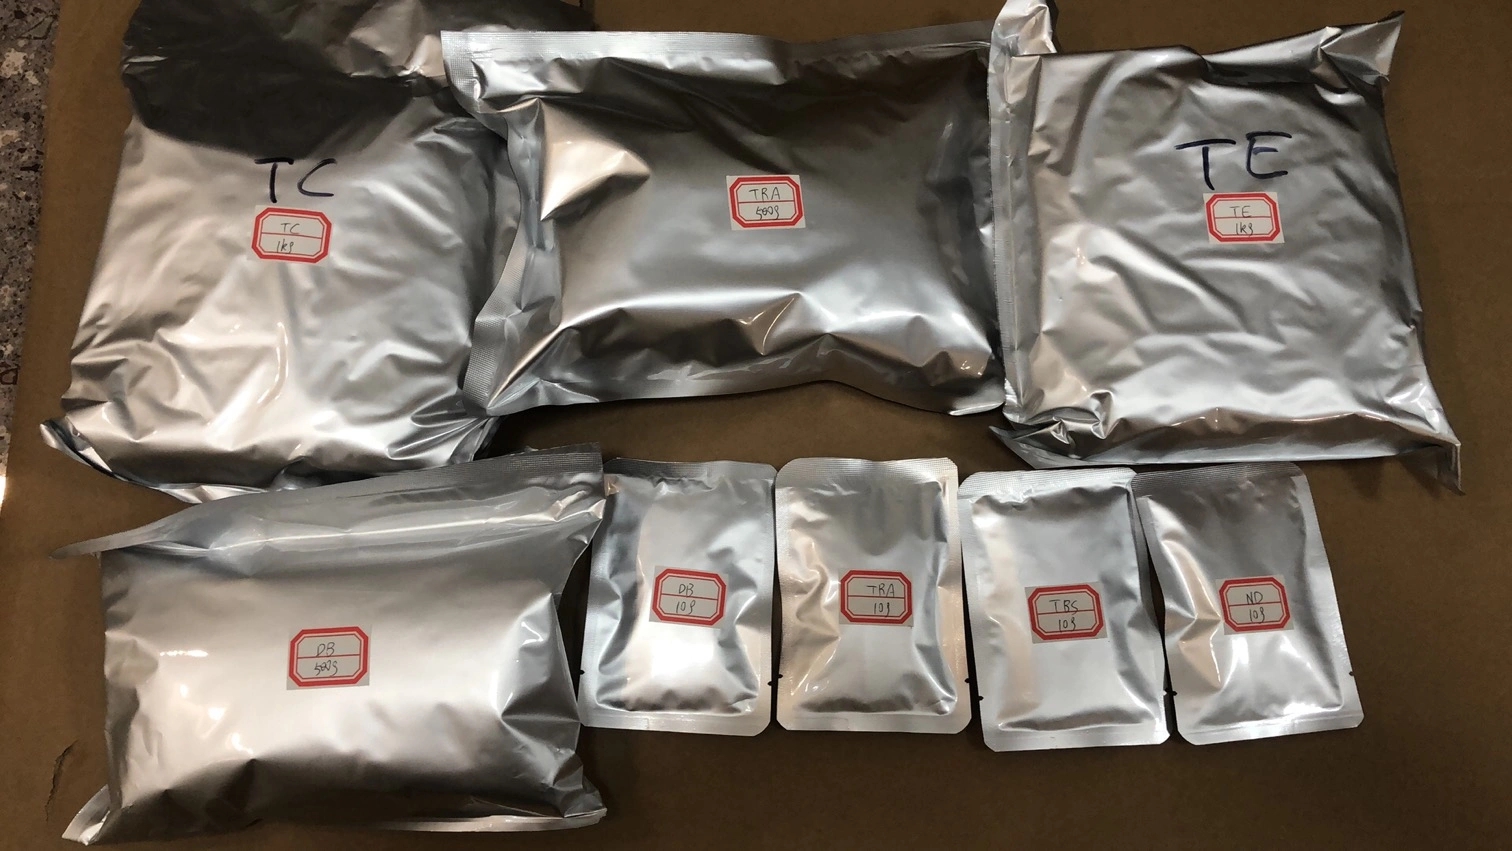 Enan-Cyp-Prop-Steroids-Powder-USA-UK-Canada-Domestic-with-Free-Sample-Testo.webp (2)